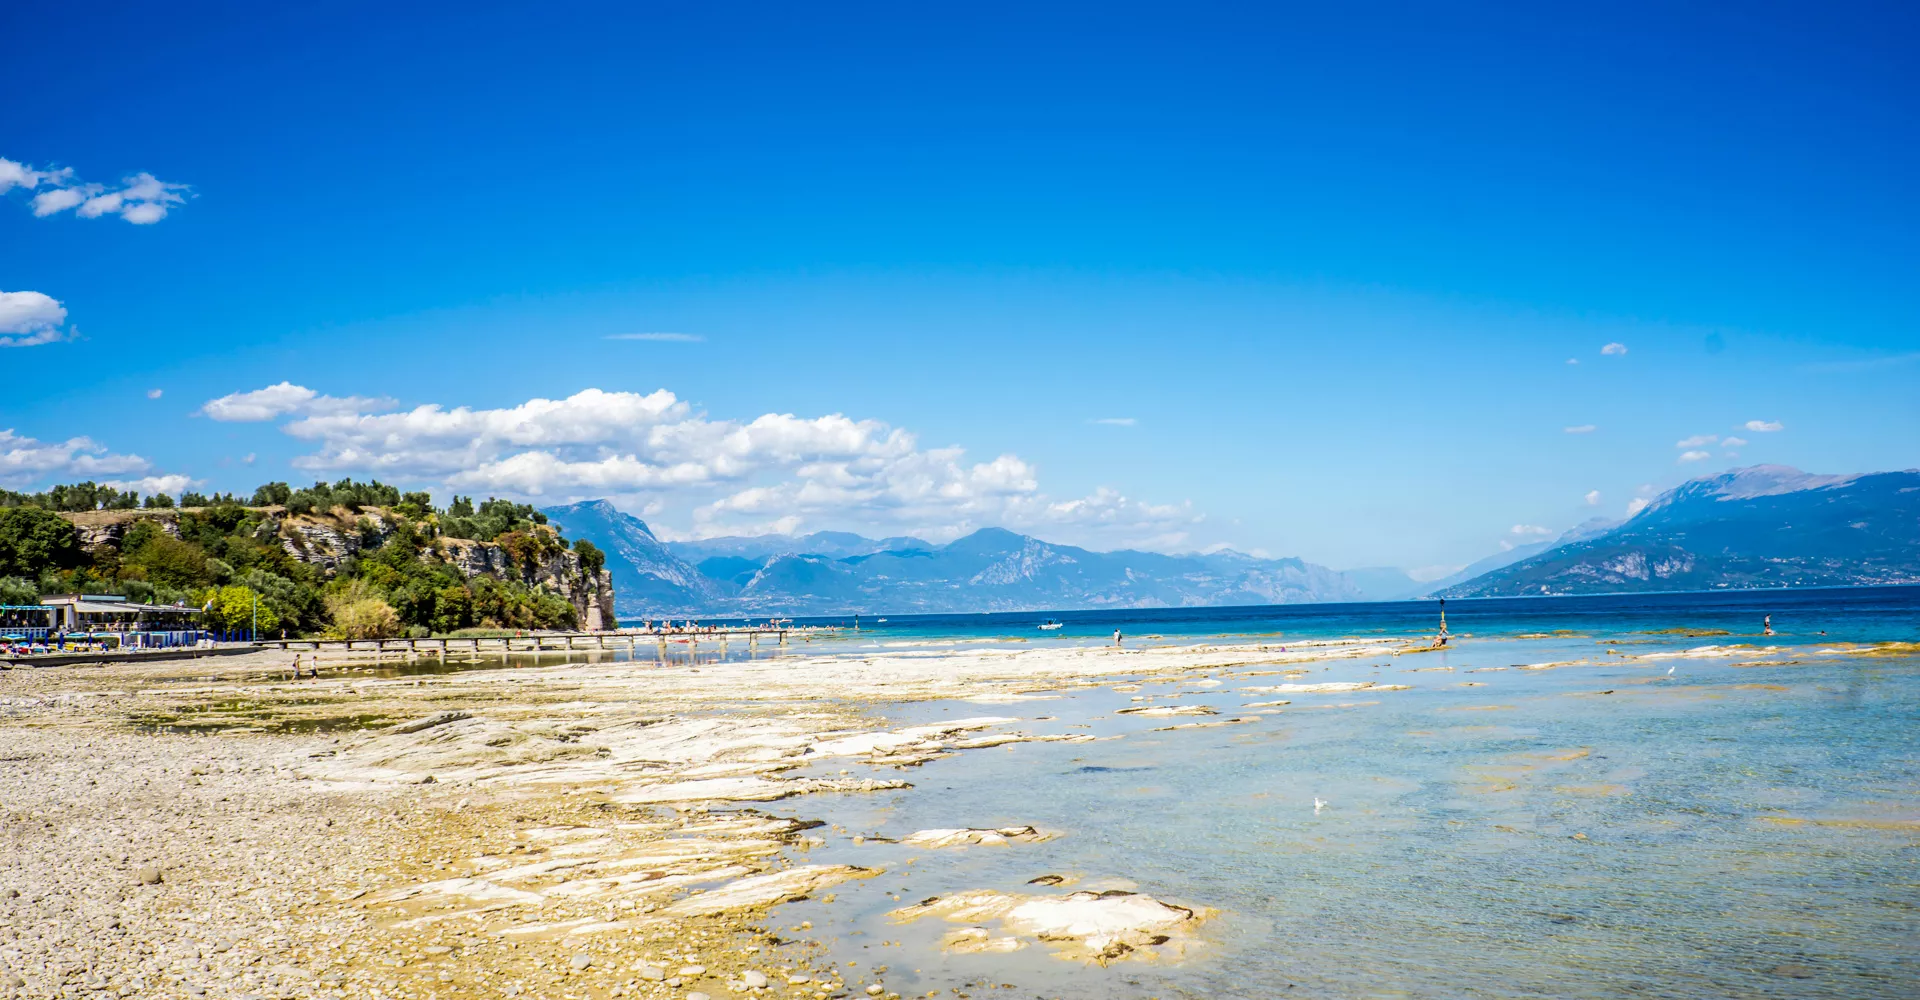 Spiaggia del Prete in Italy, Europe | Beaches - Rated 0.8